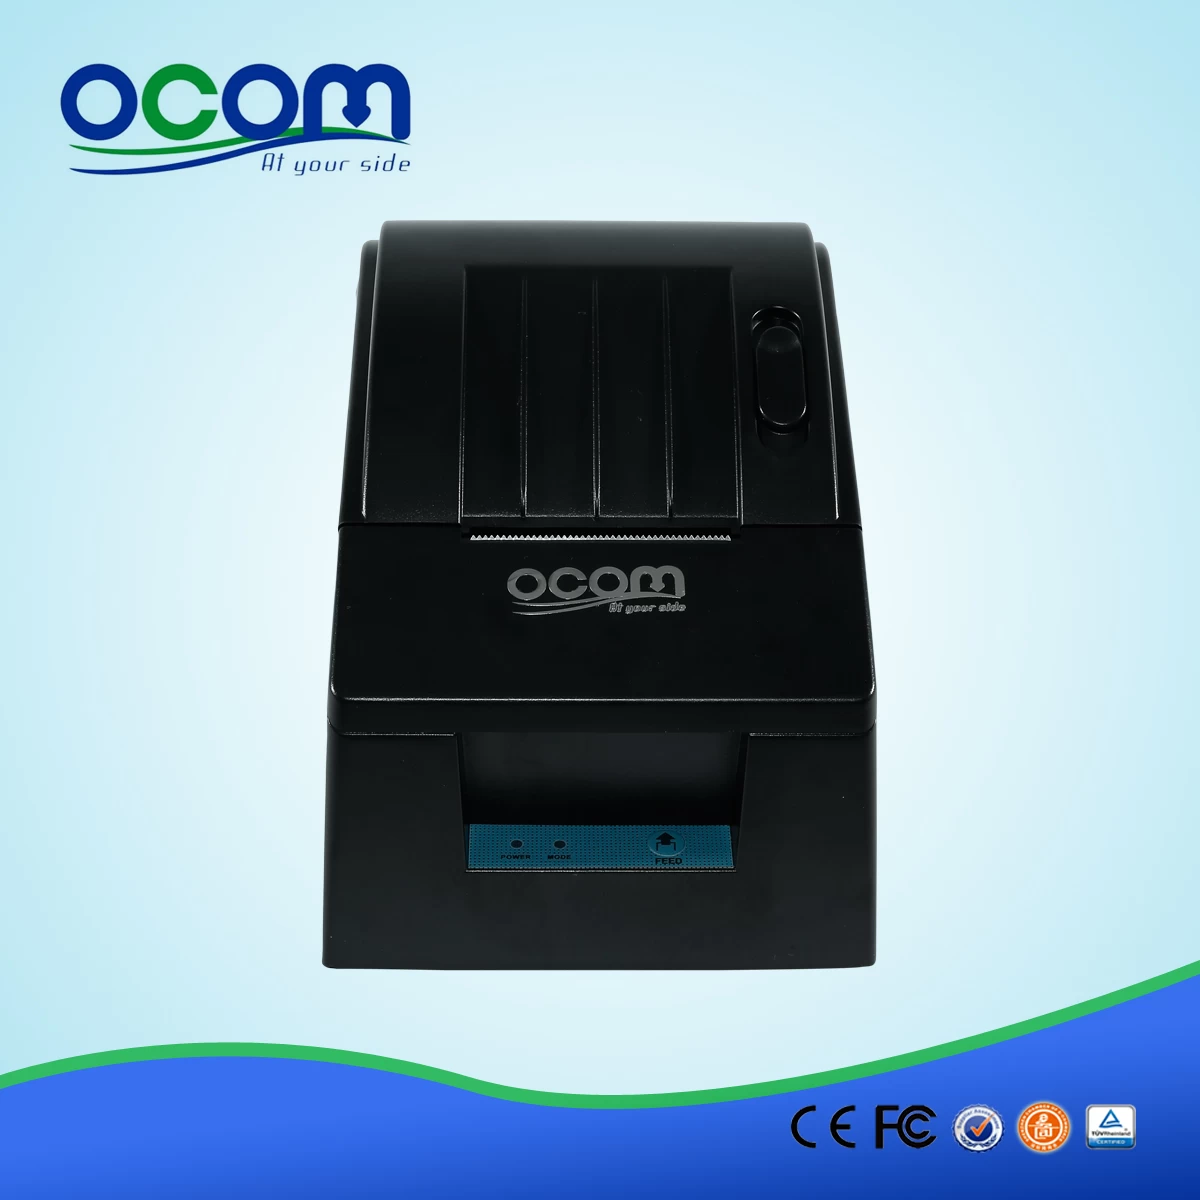 58mm Pos Thermal Receipt Printer Price (OCPP-586)